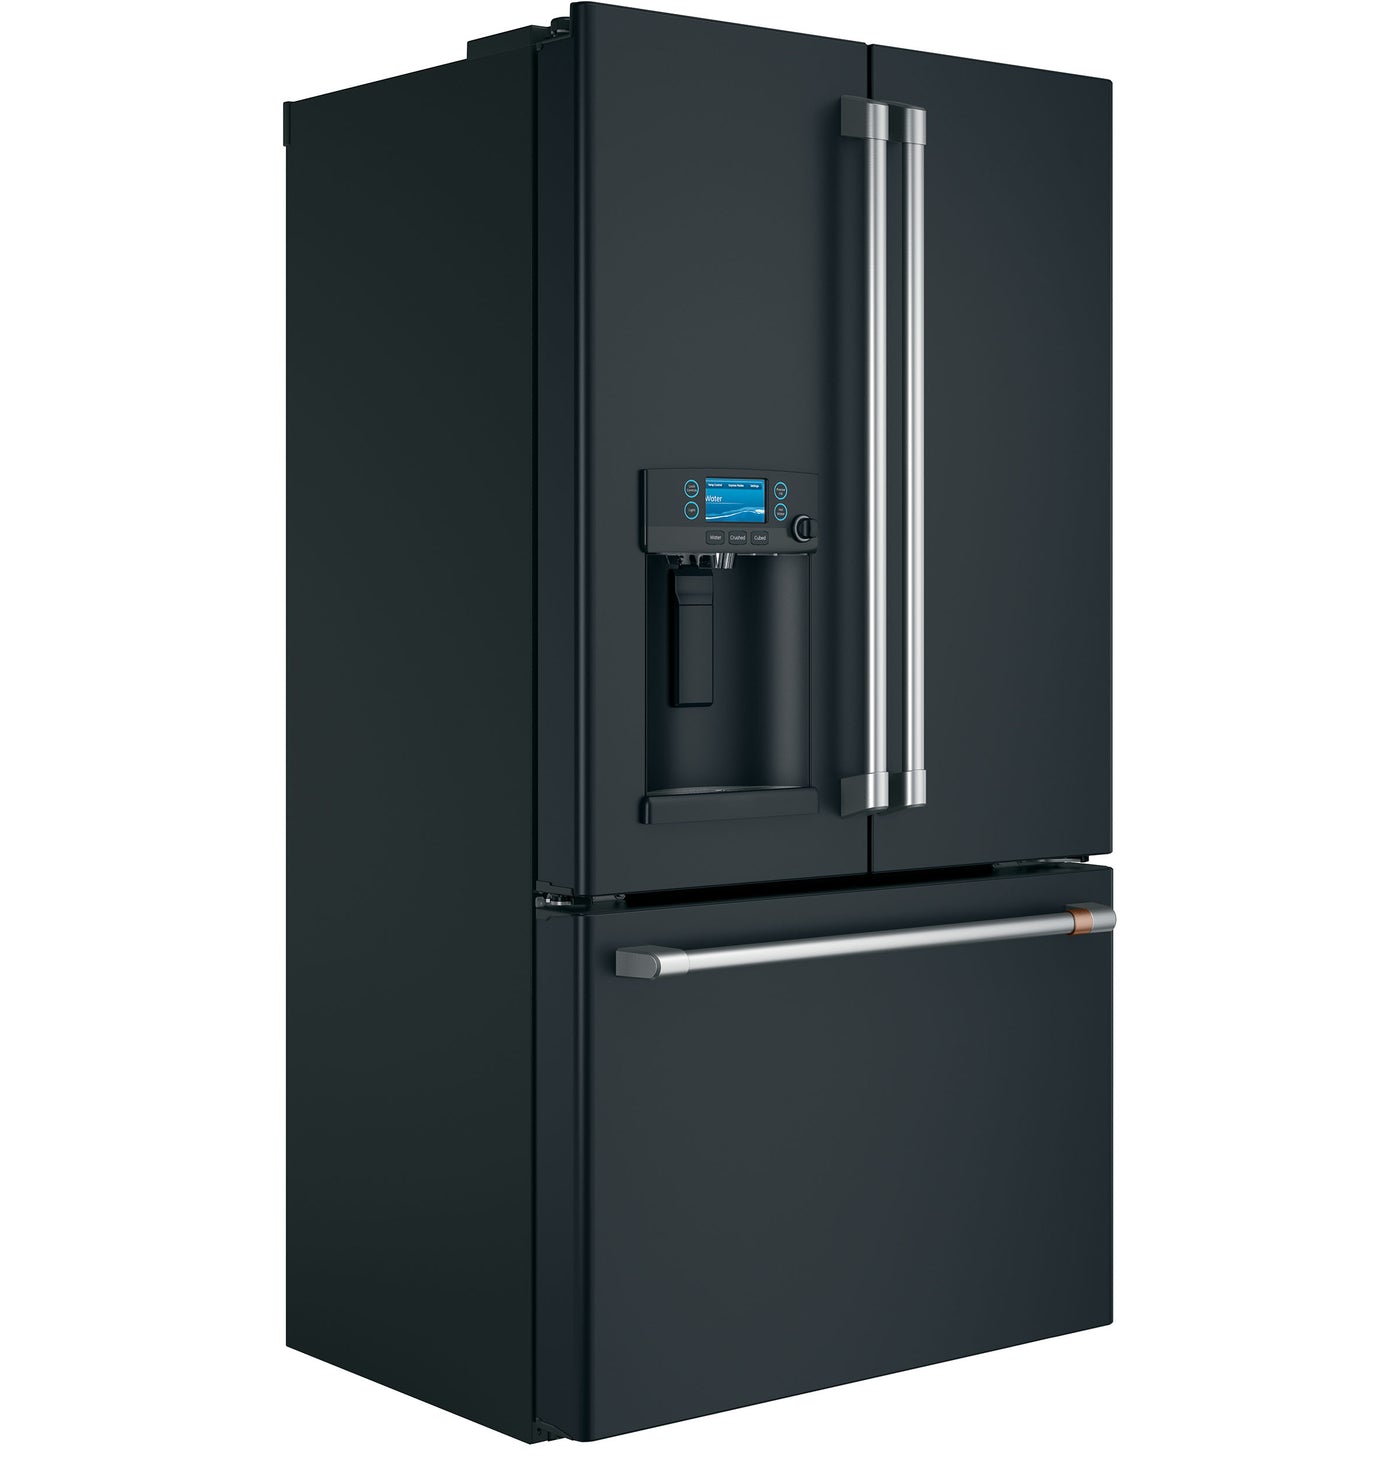 Café Matte Black 36" Counter-Depth French-Door Refrigerator with Hot Water Dispenser (22.2 Cu. Ft.) - CYE22TP3MD1